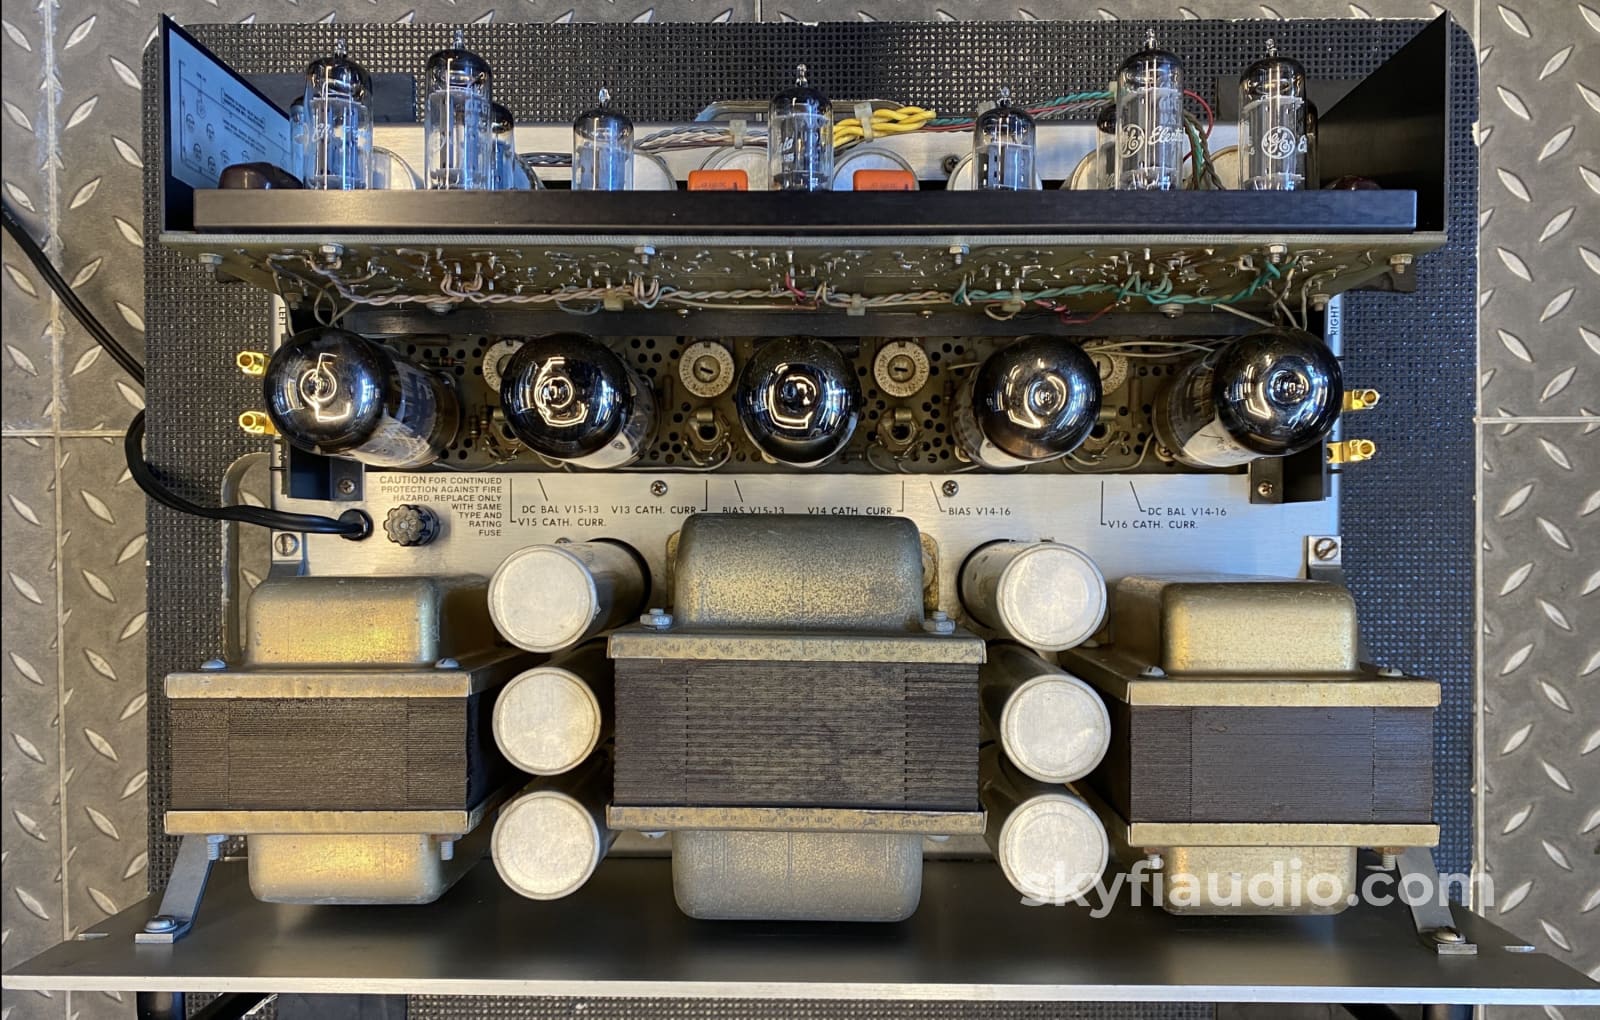 Audio Research D-76A Vintage All-Tube Amplifier Survivor Condition